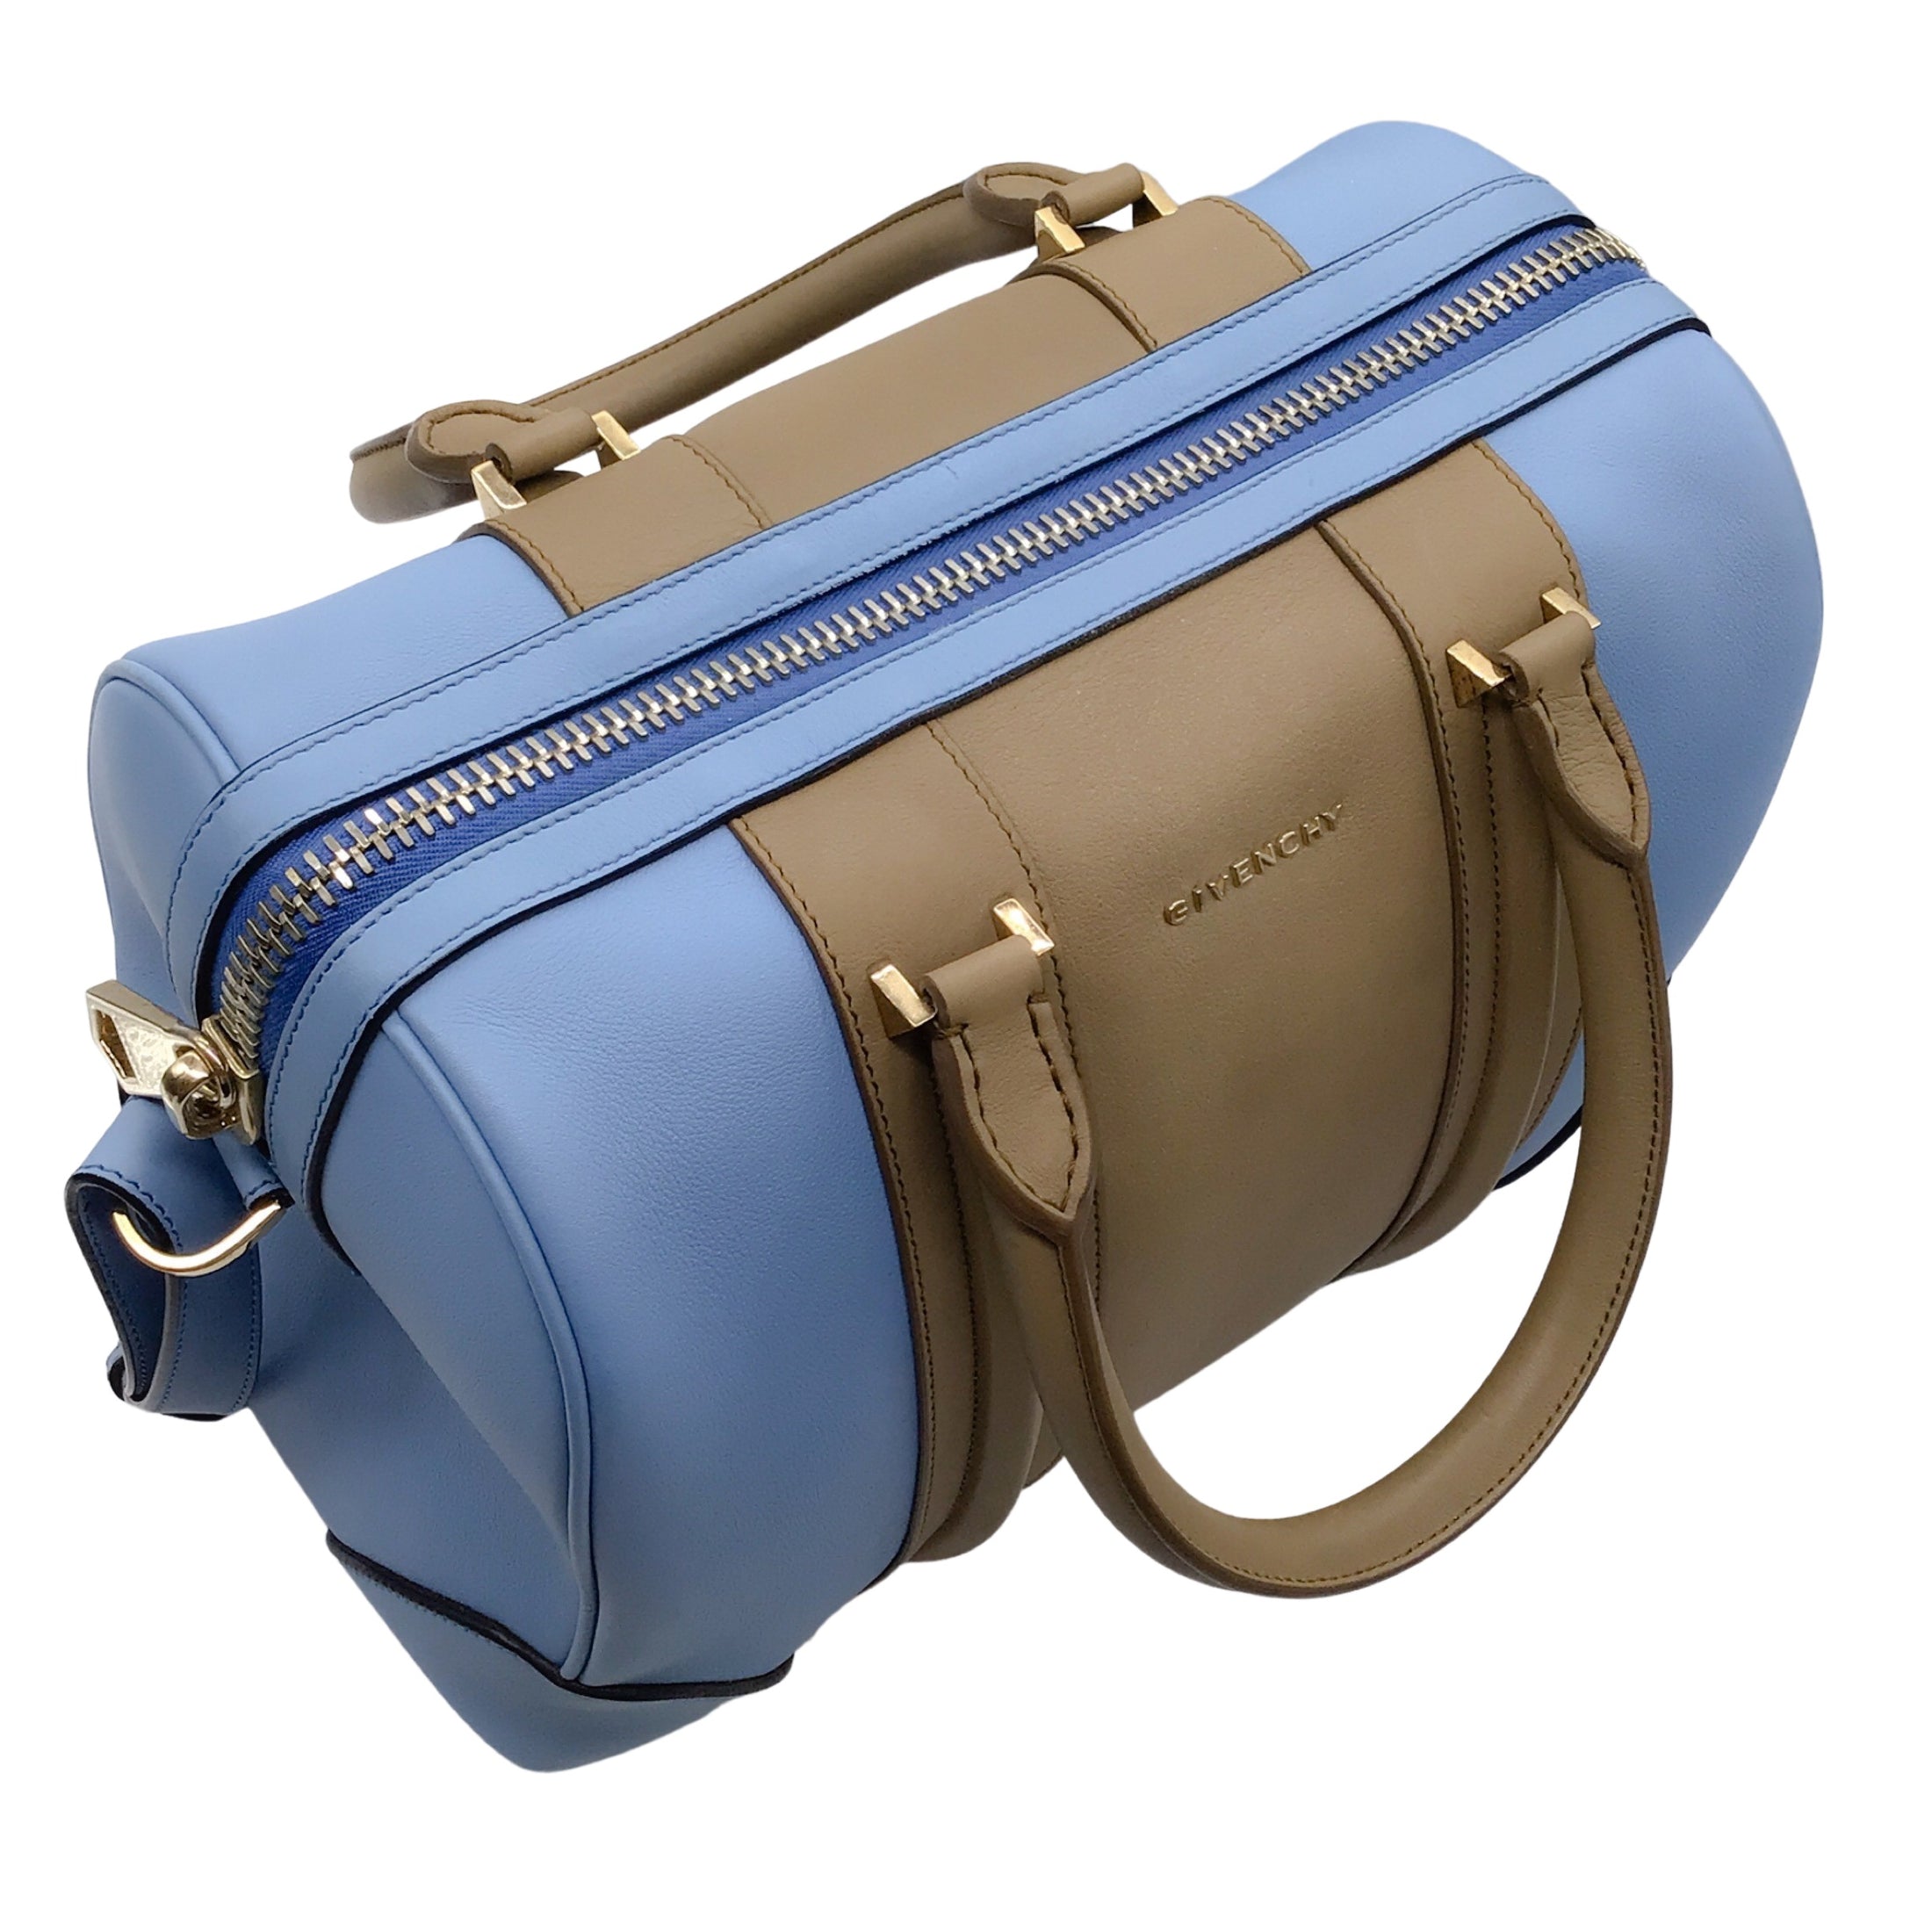 Givenchy Blue / Taupe Lucrezia Leather Double Top Handle Shoulder Bag